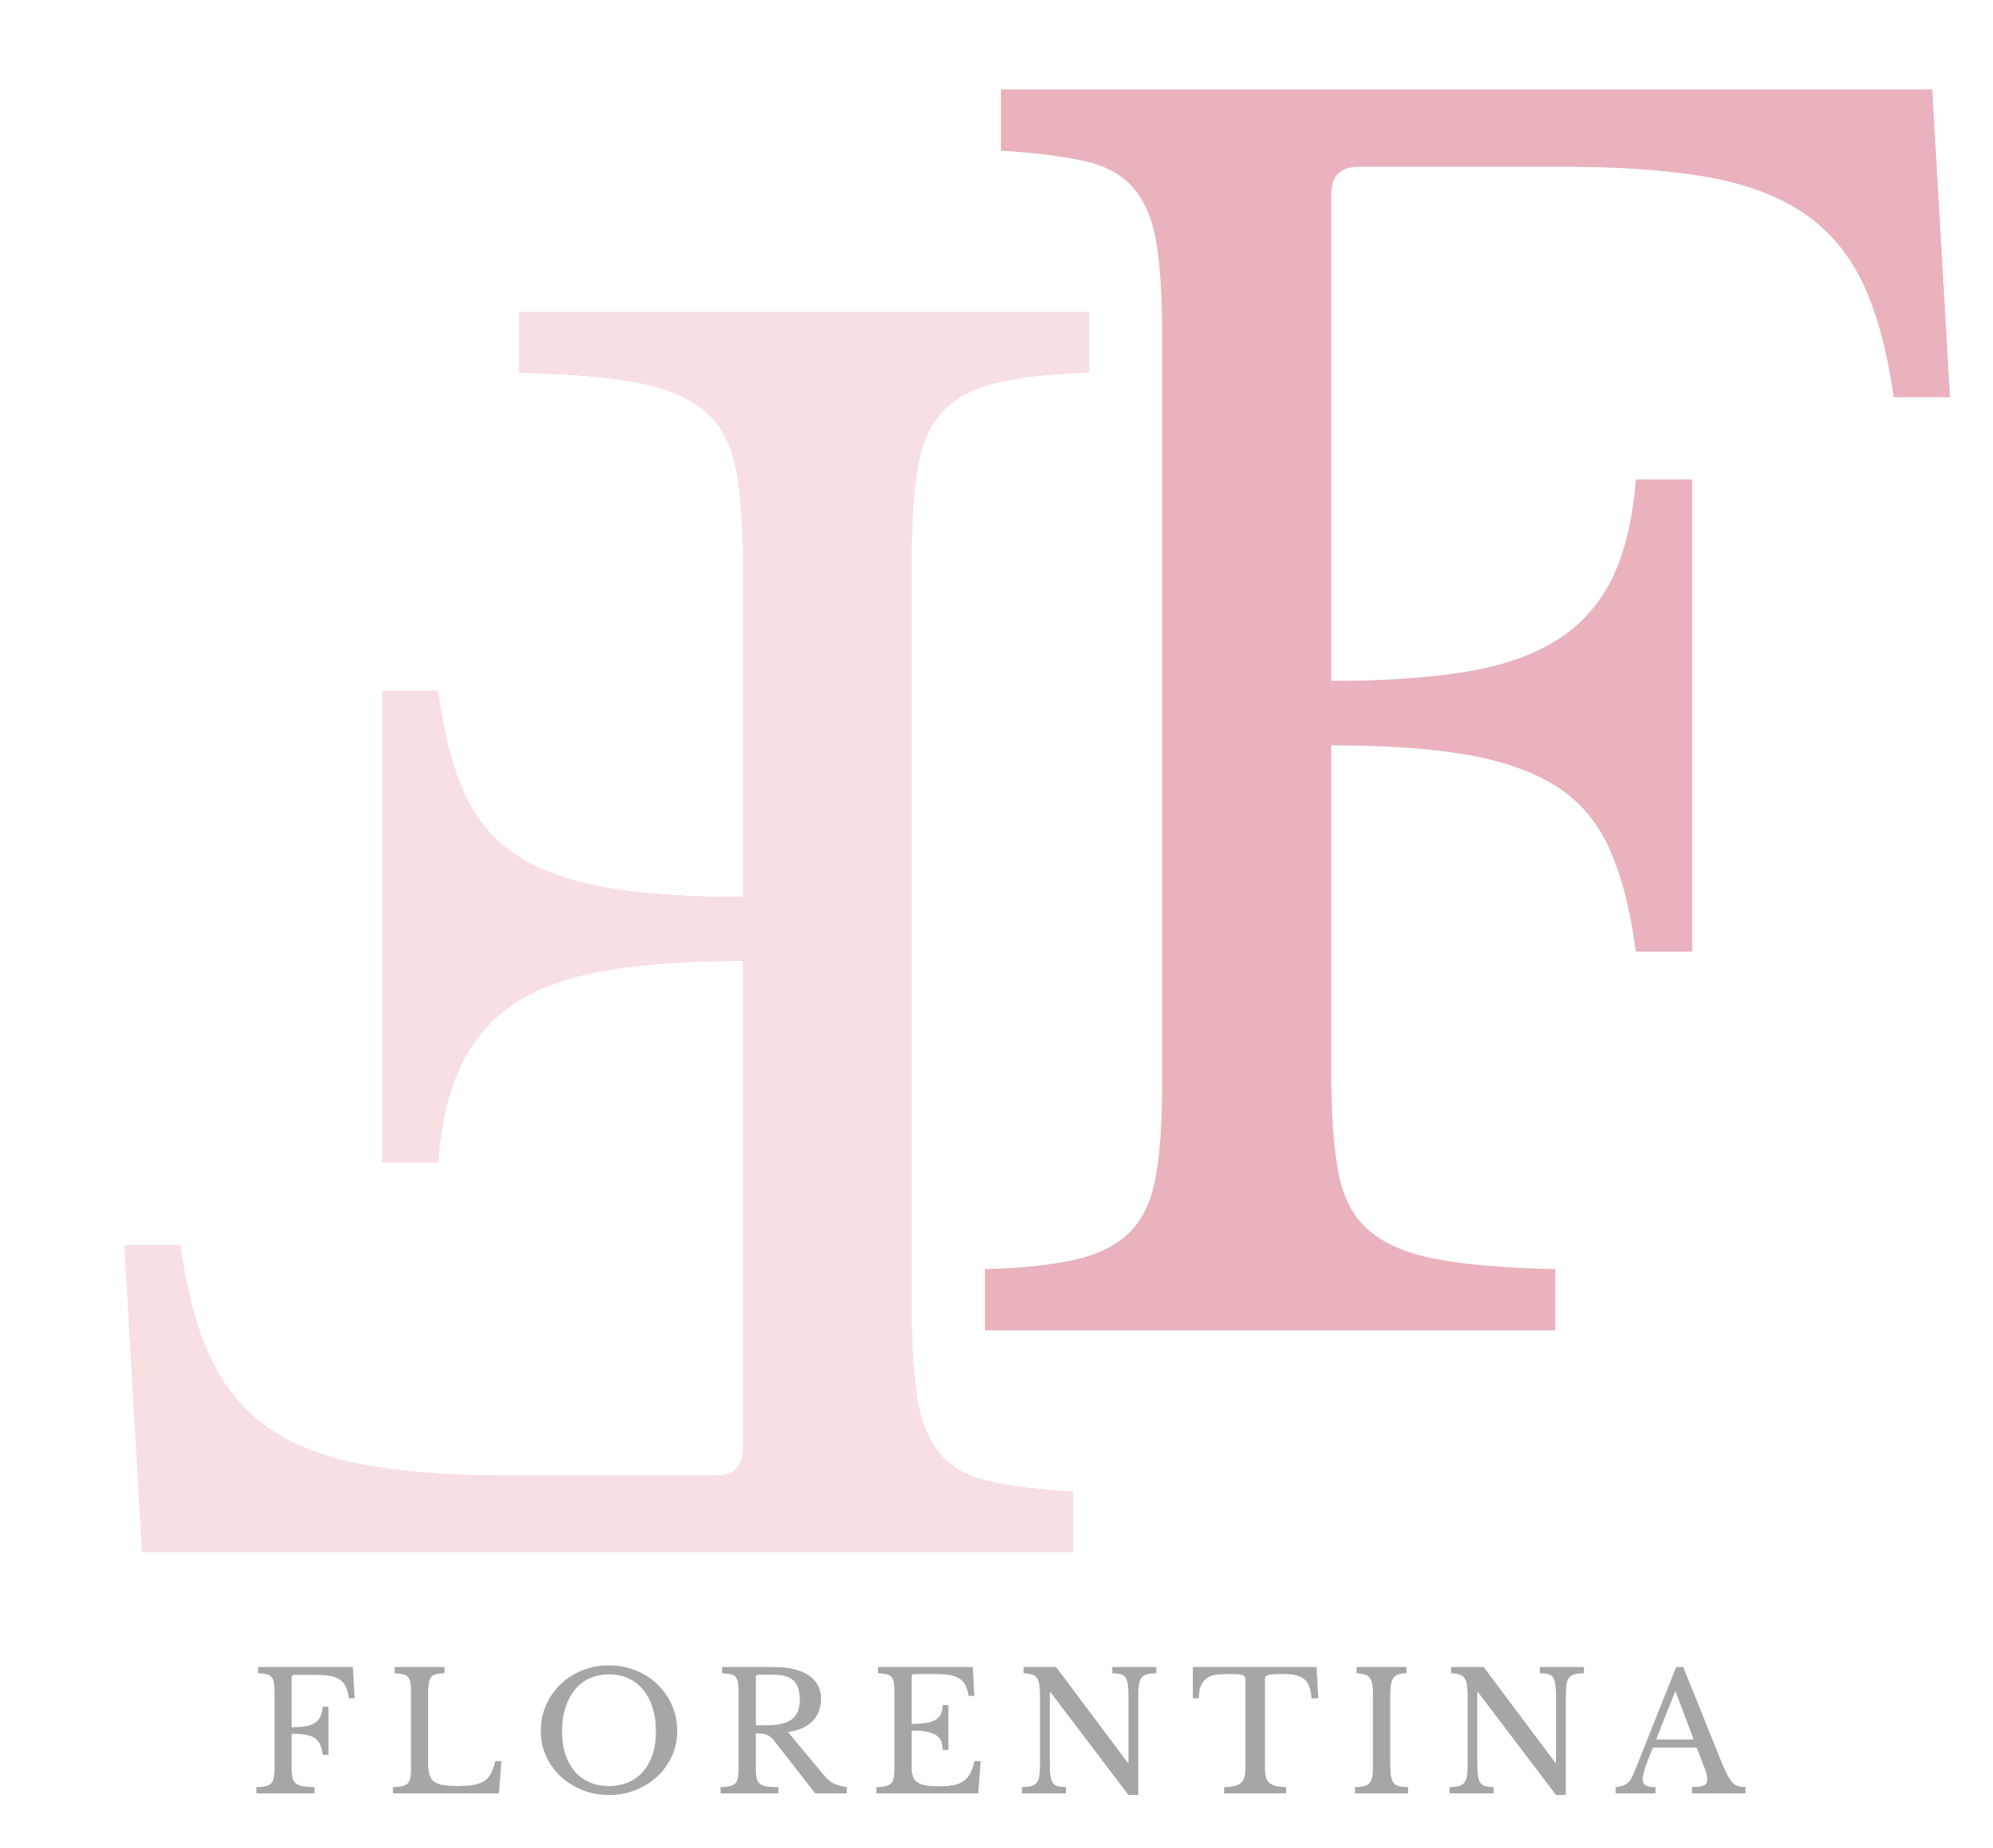 Florentina